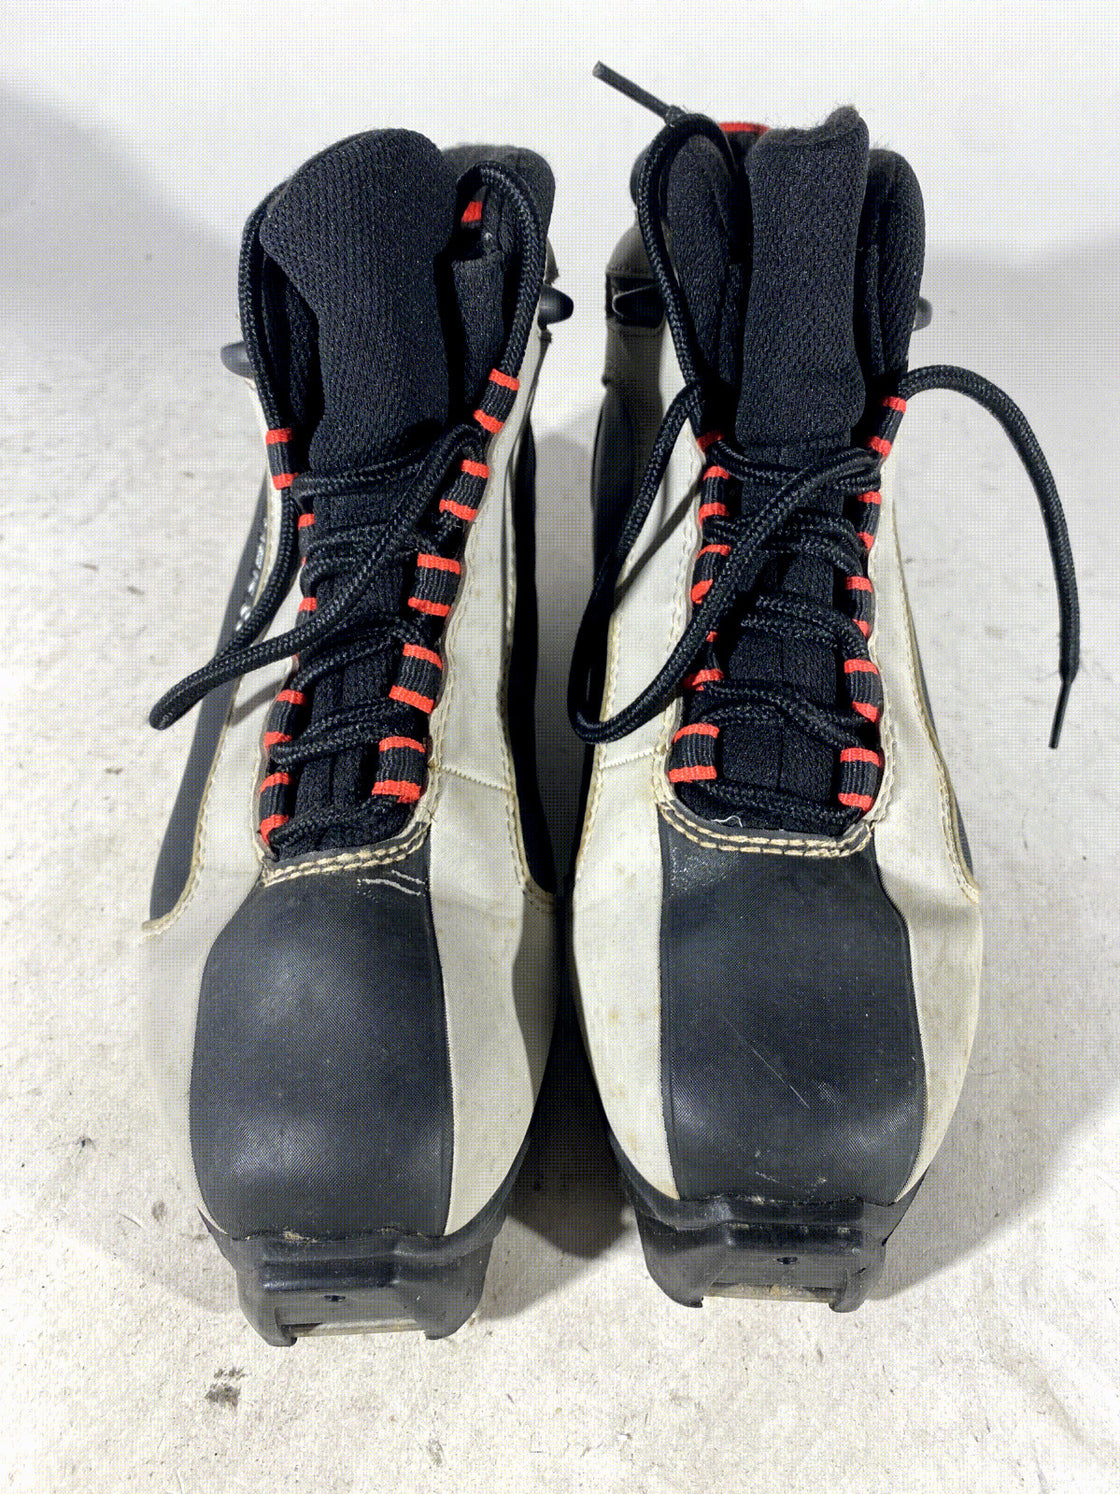 FISCHER XC Sport Nordic Cross Country Ski Boots Size EU39 US7 SNS Profil